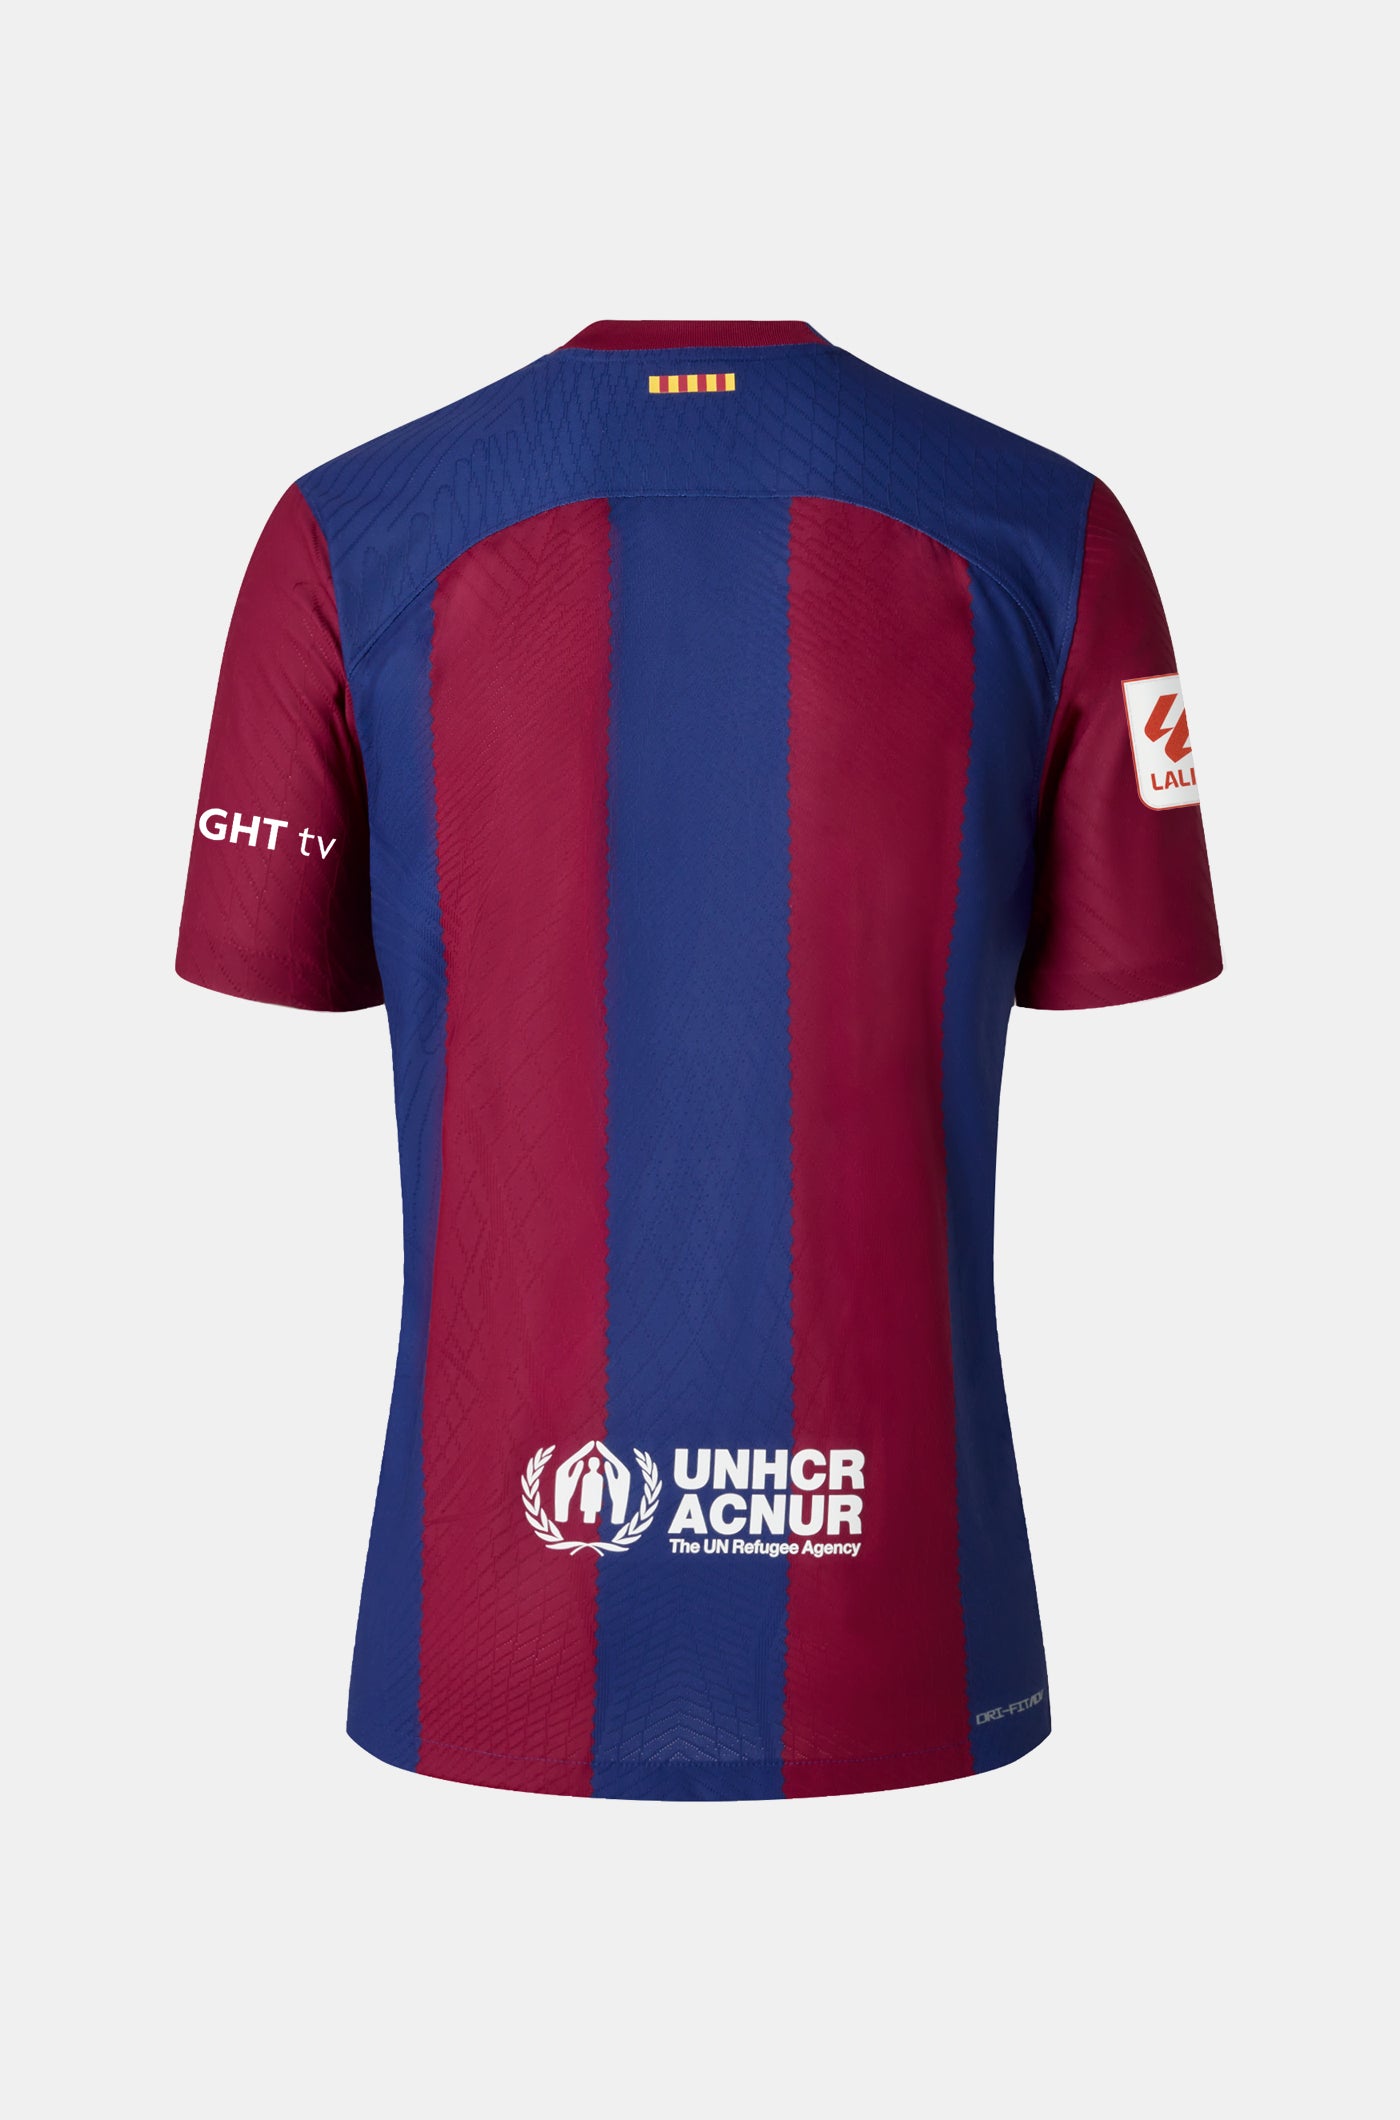 LFP FC Barcelona home shirt 23/24 - Long-sleeve